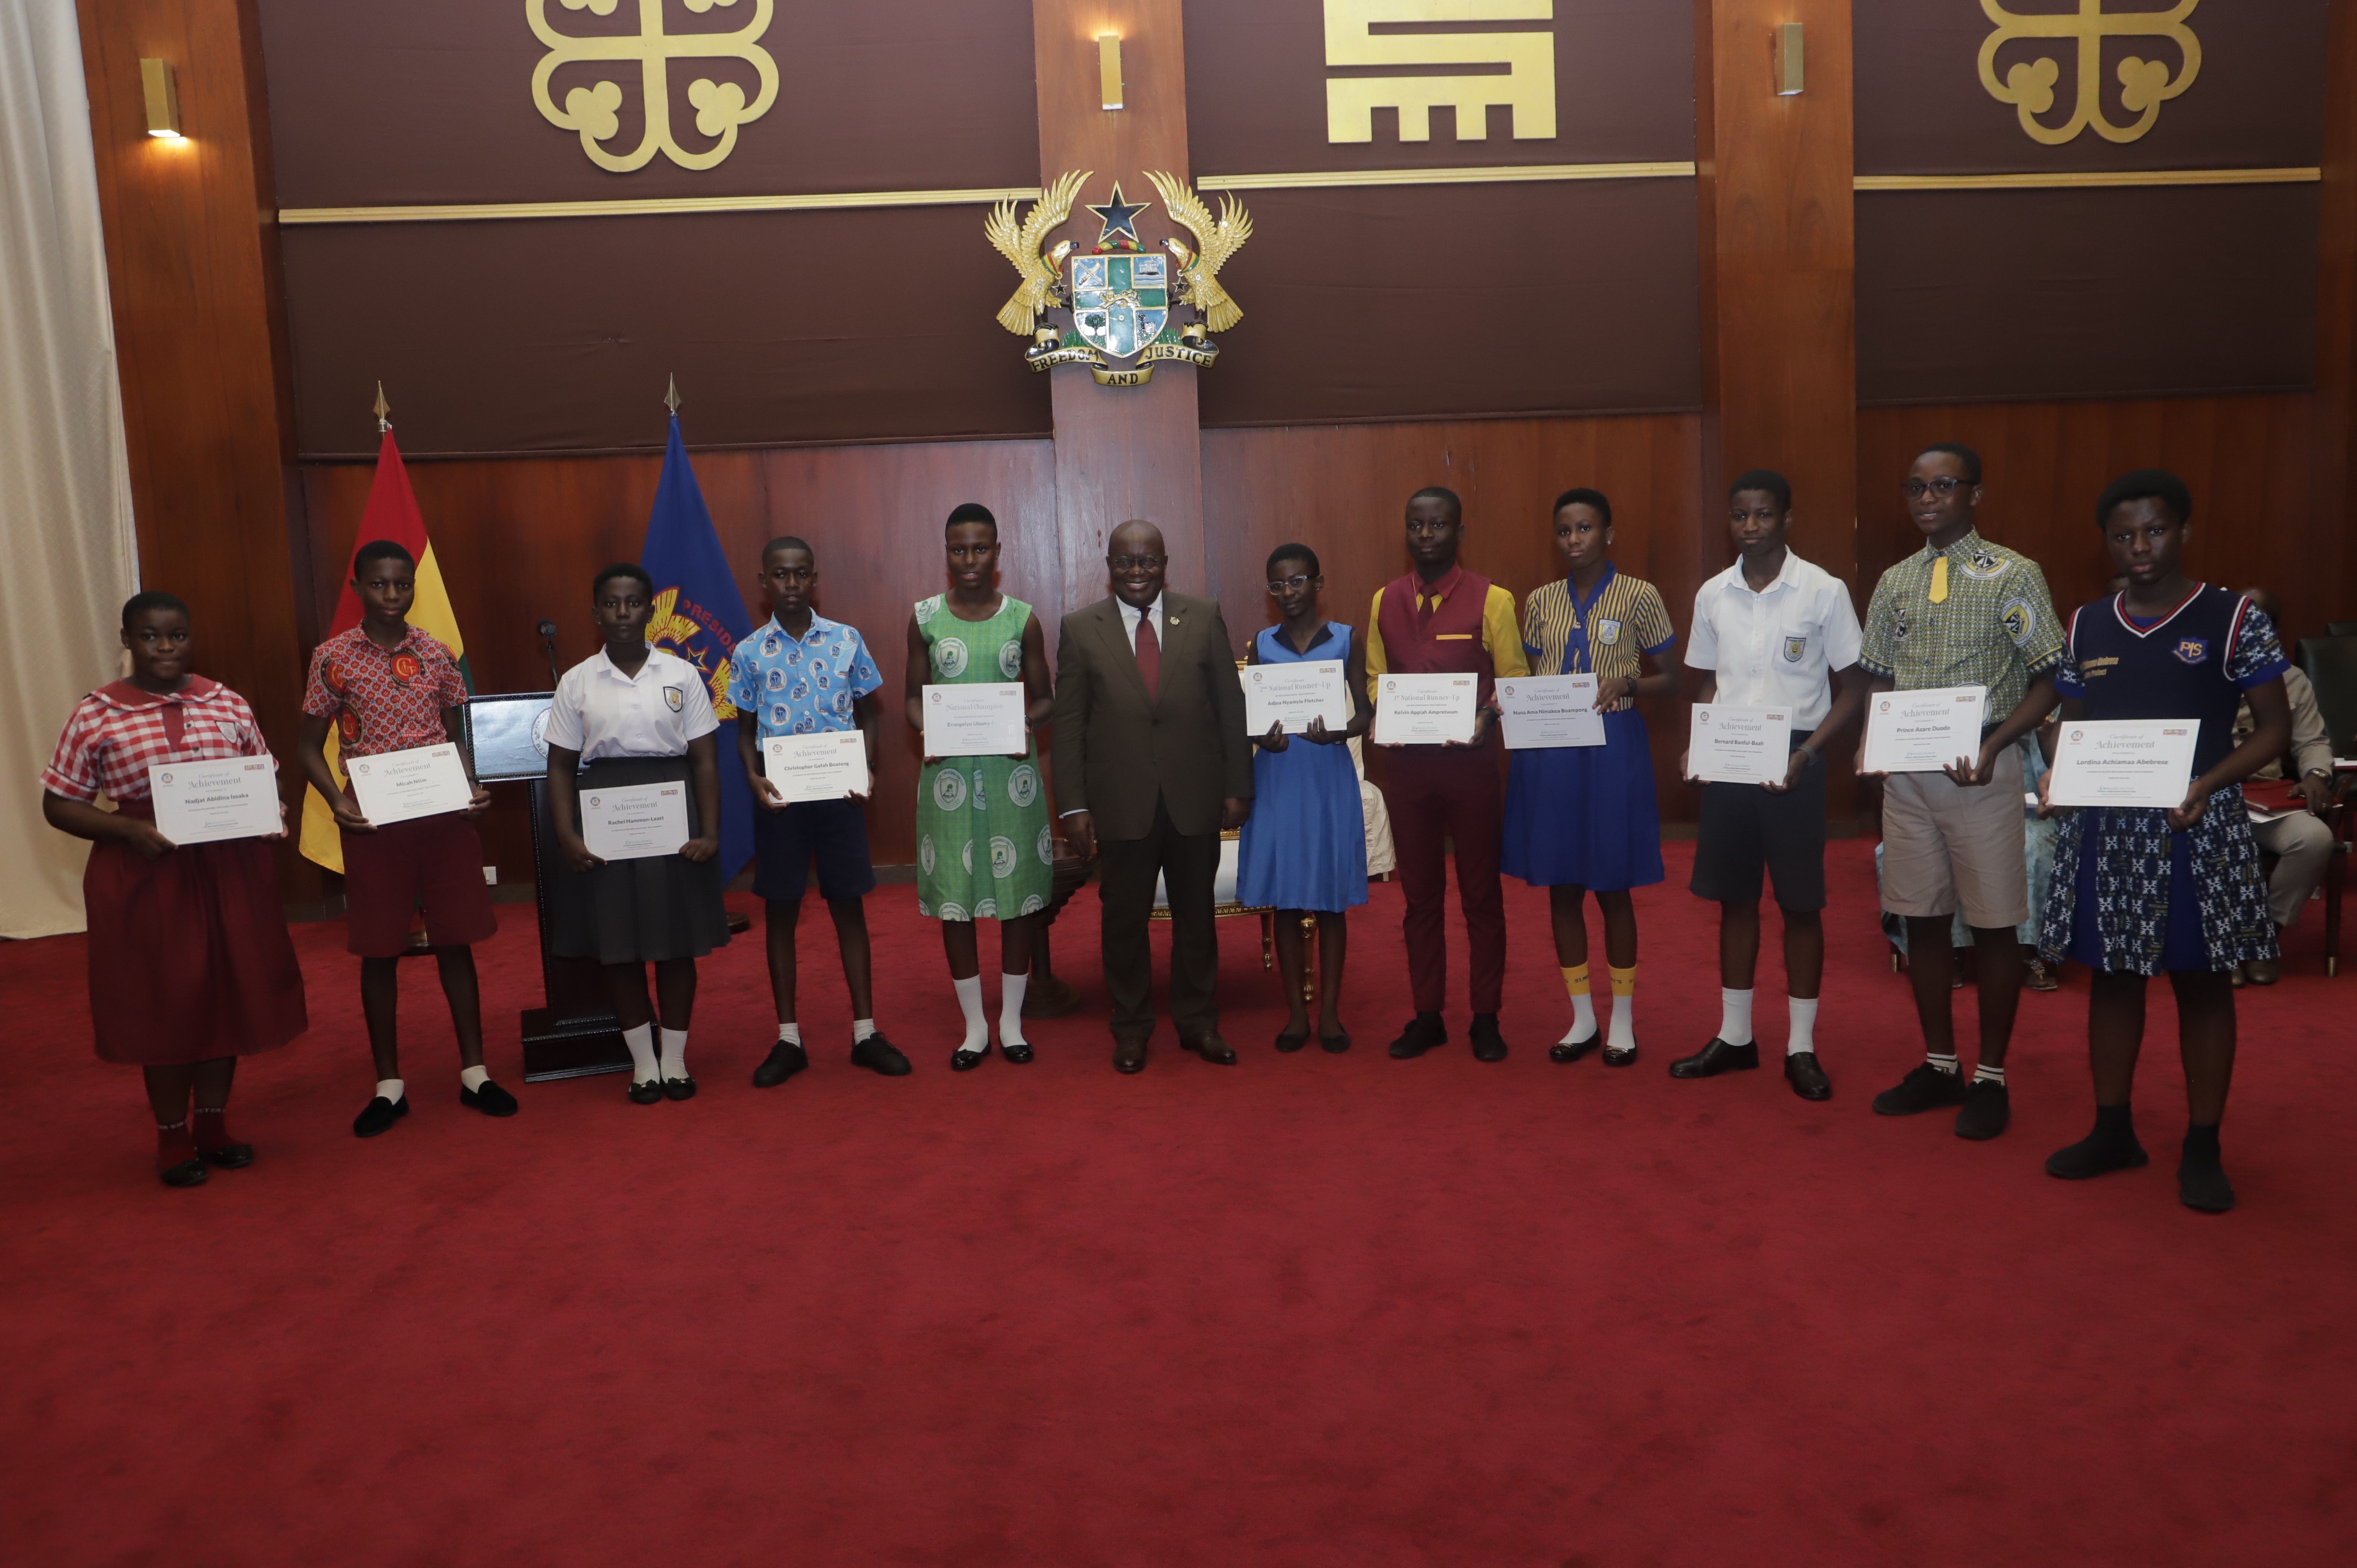 Choose STEM courses - President Akufo-Addo encourages school children